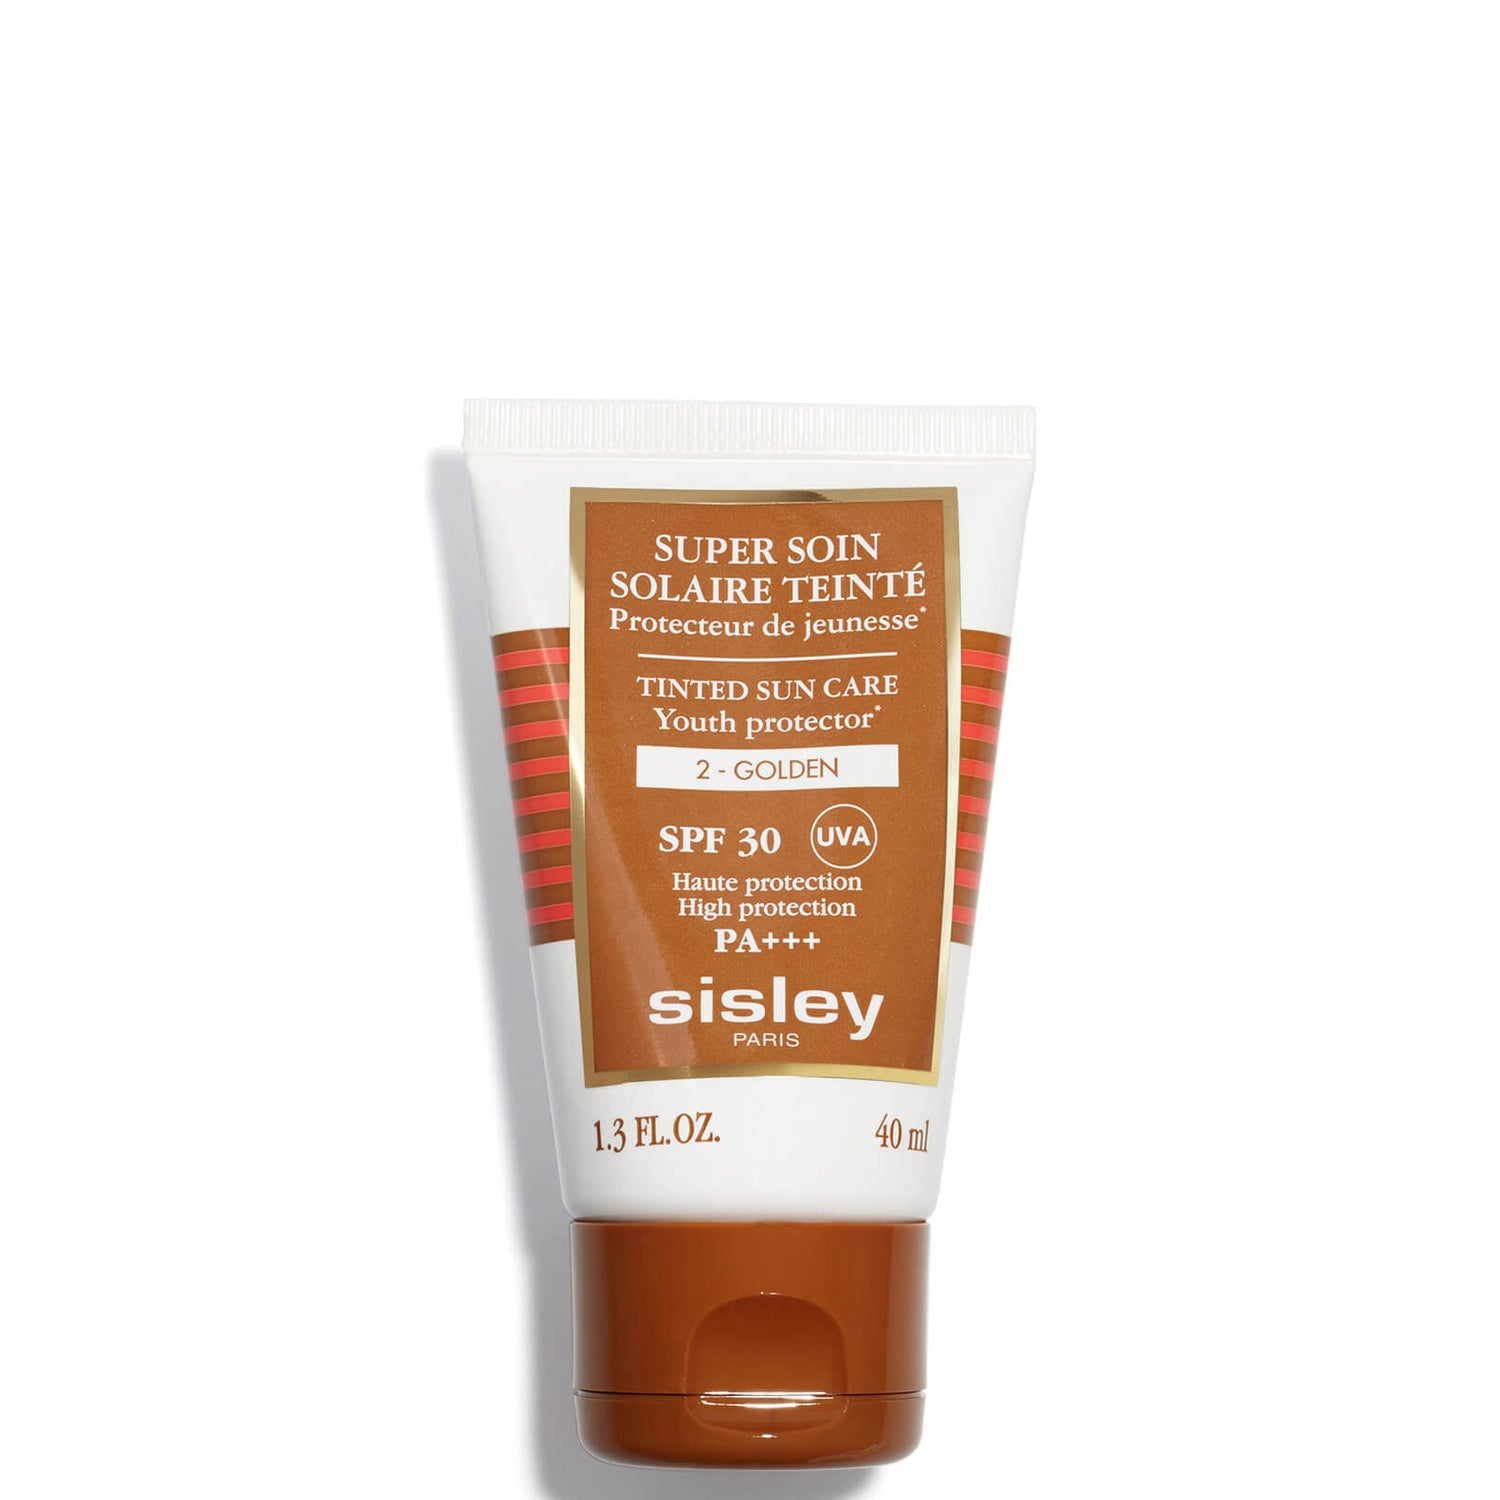 SISLEY-PARIS Super Soin Solaire Tinted SPF30 Cream 40ml (Various Shades)